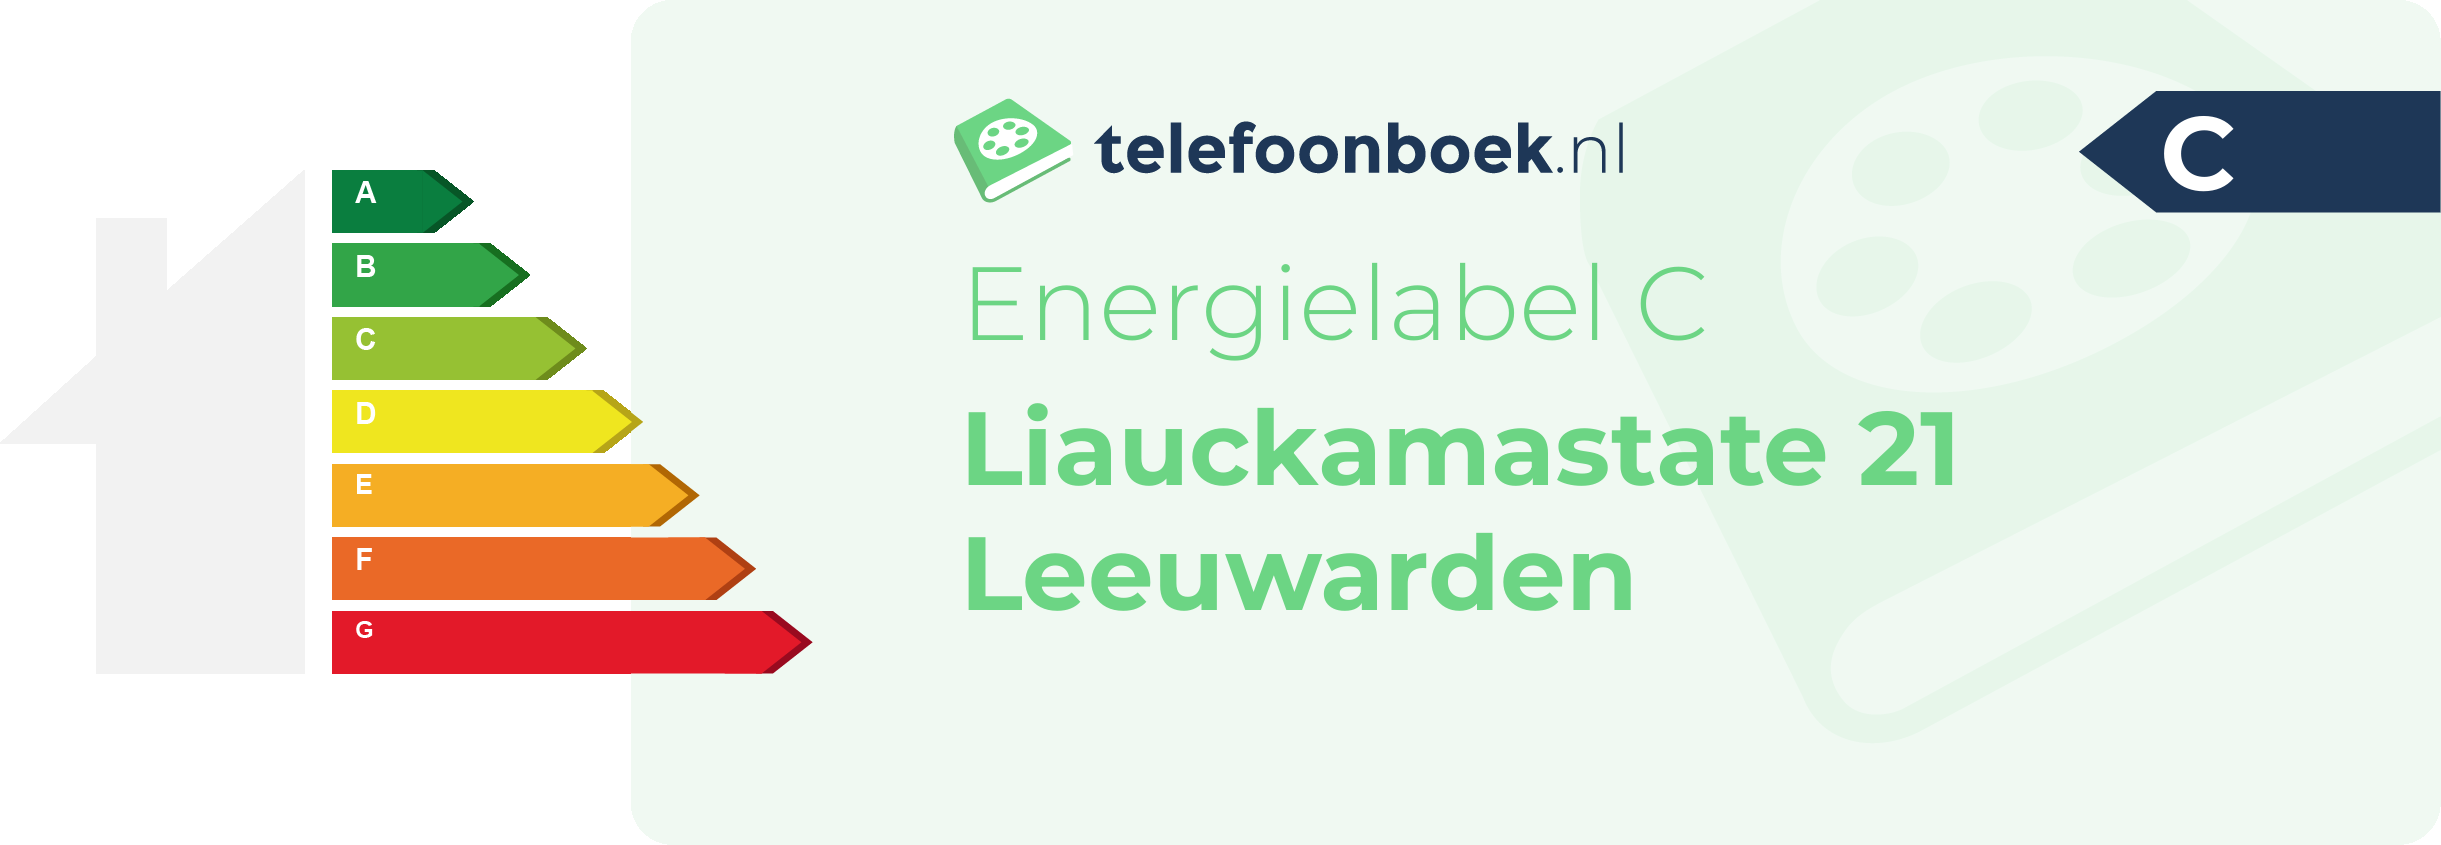 Energielabel Liauckamastate 21 Leeuwarden